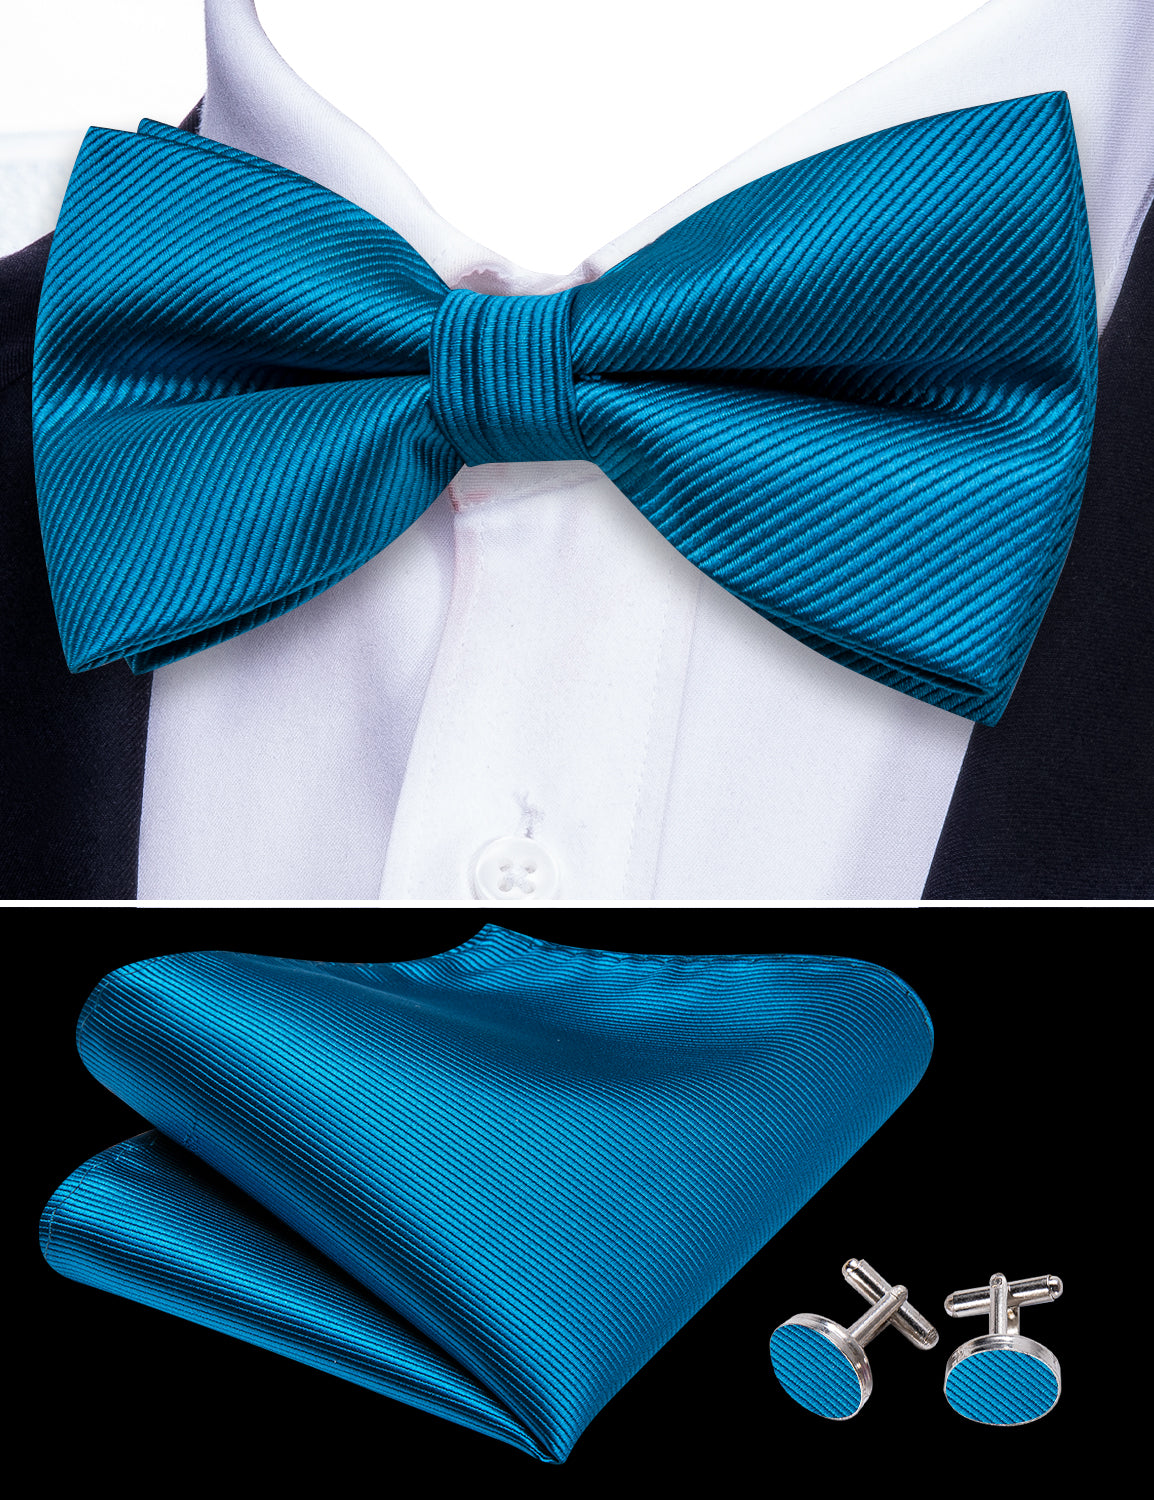 Sky Blue Solid Pre-tied Bow Tie Hanky Cufflinks Set